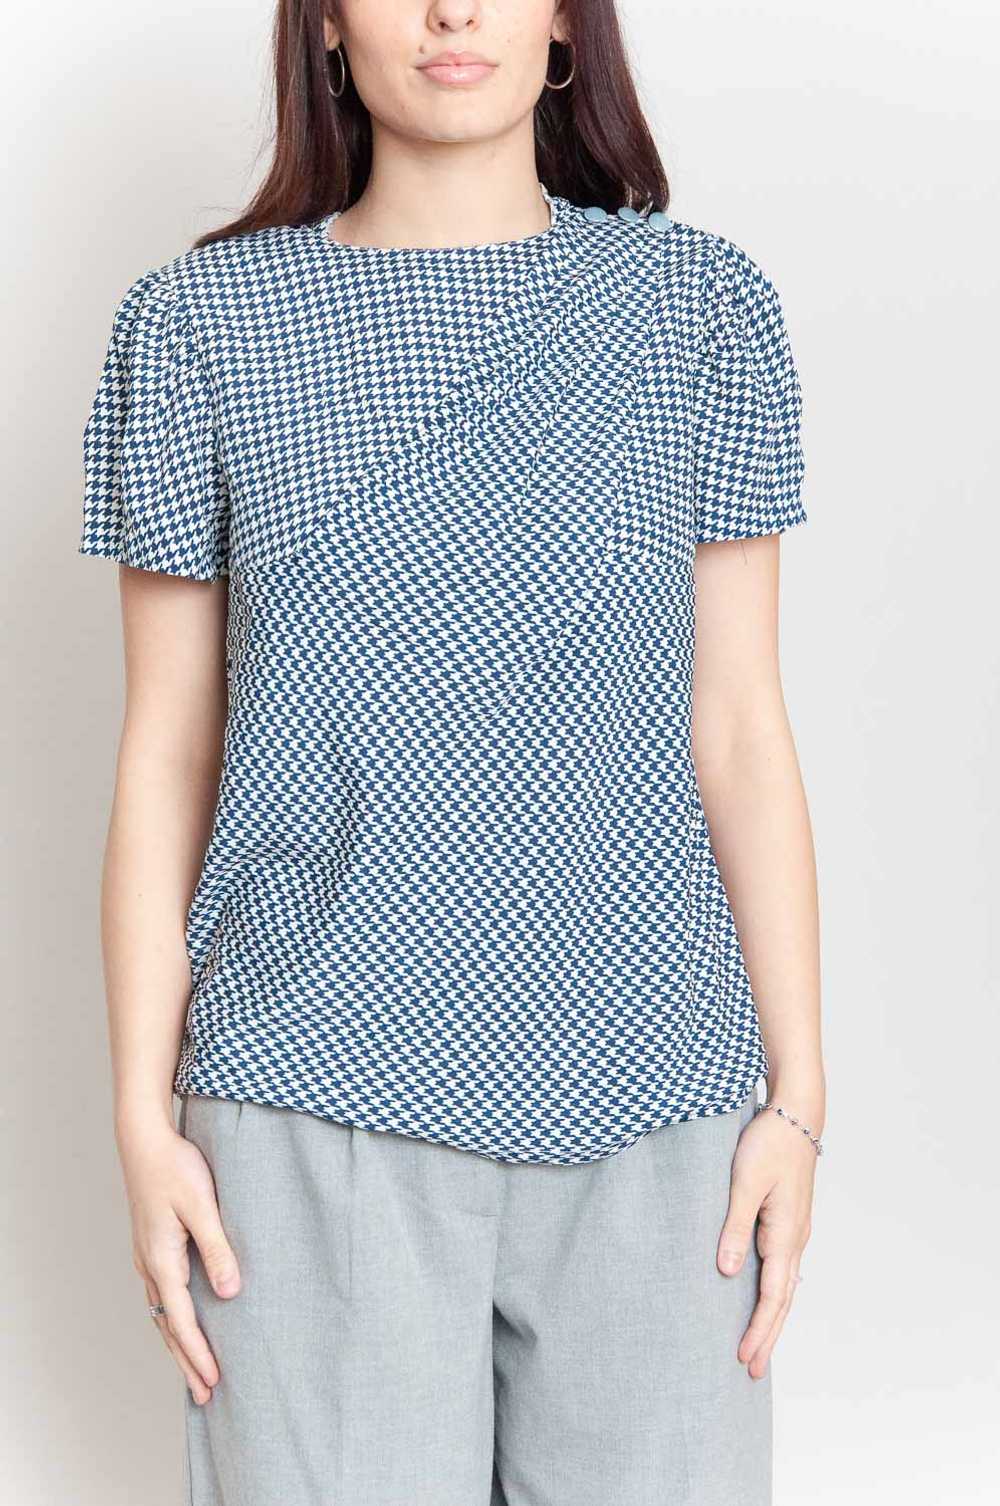 Luisa Spagnoli buttonless blouse gathered Blue wi… - image 2